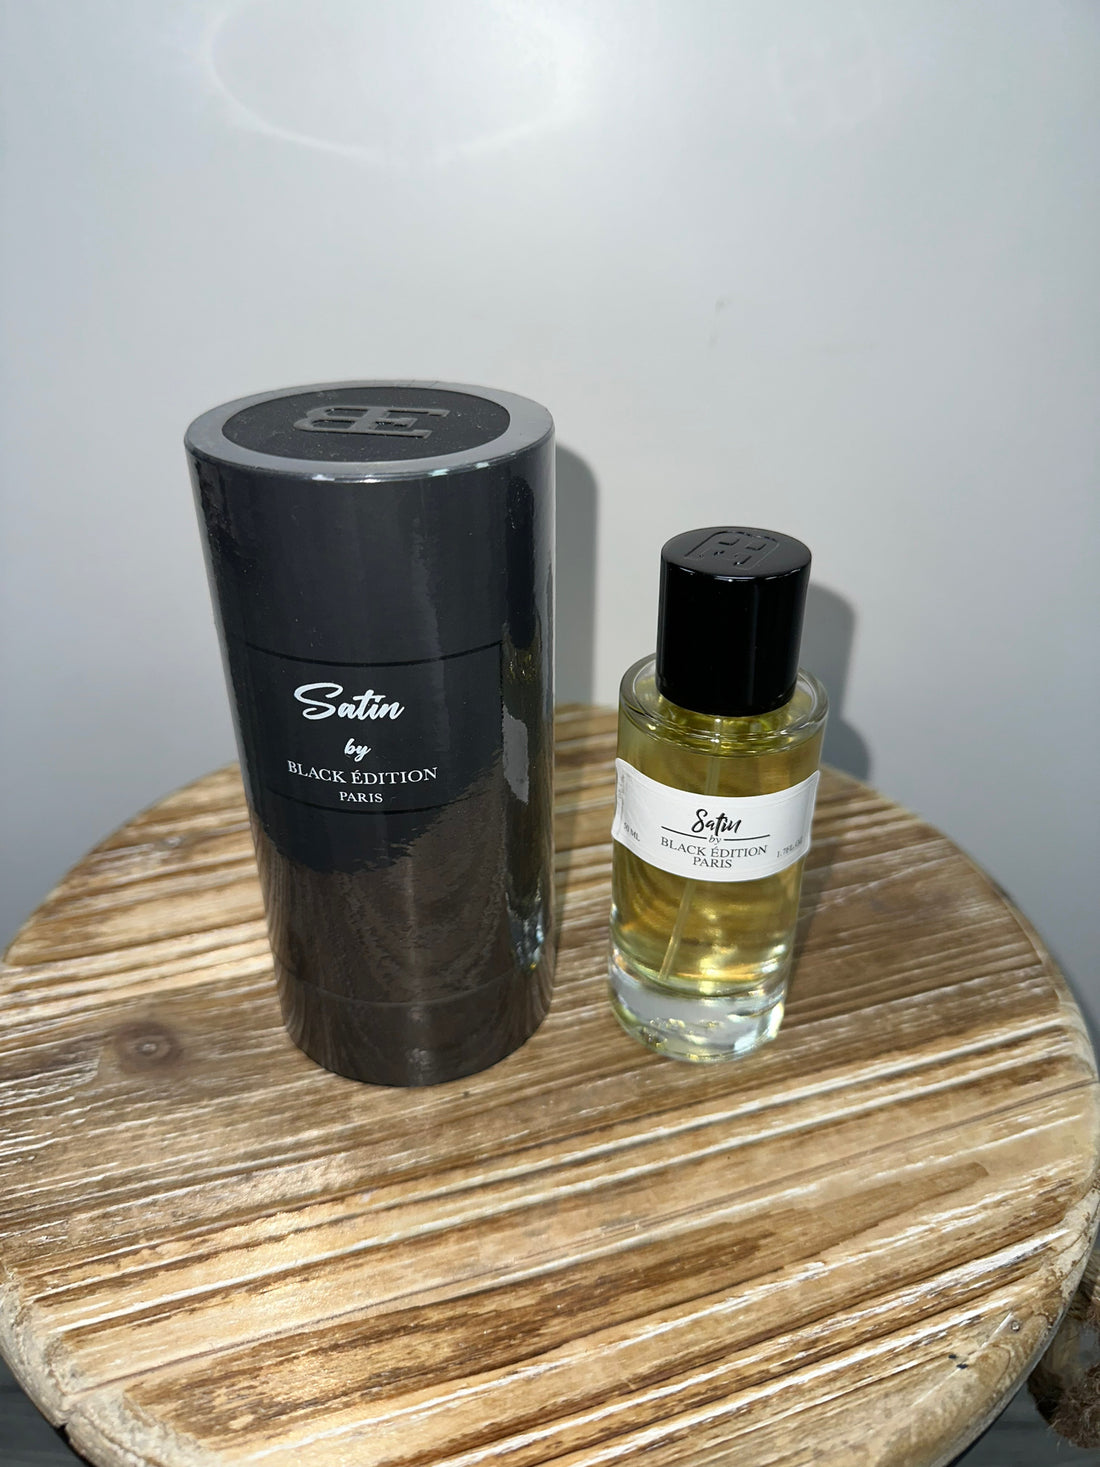 Black Edition Paris - Satin Perfume